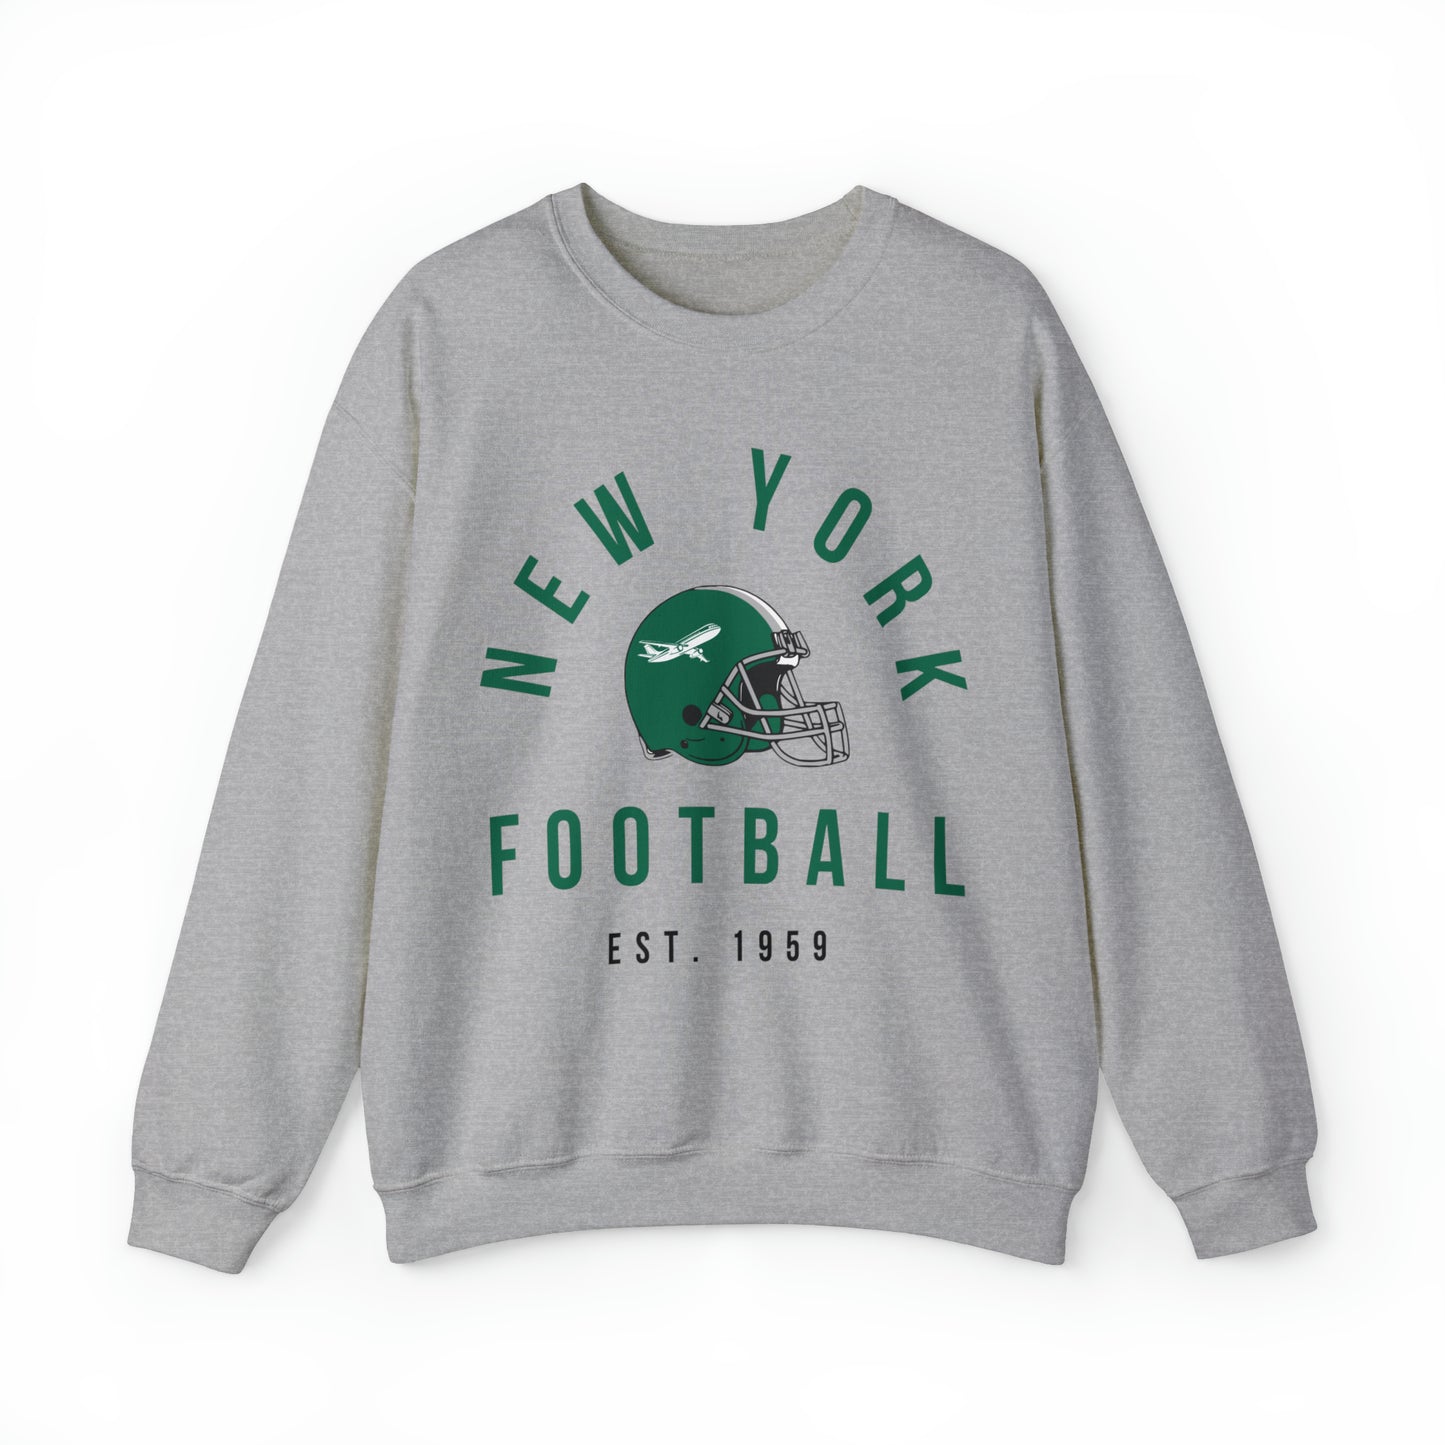 Black Vintage New York Jets Football Sweatshirt - Vintage Style Football Crewneck - Men's & Women's Football Apparel